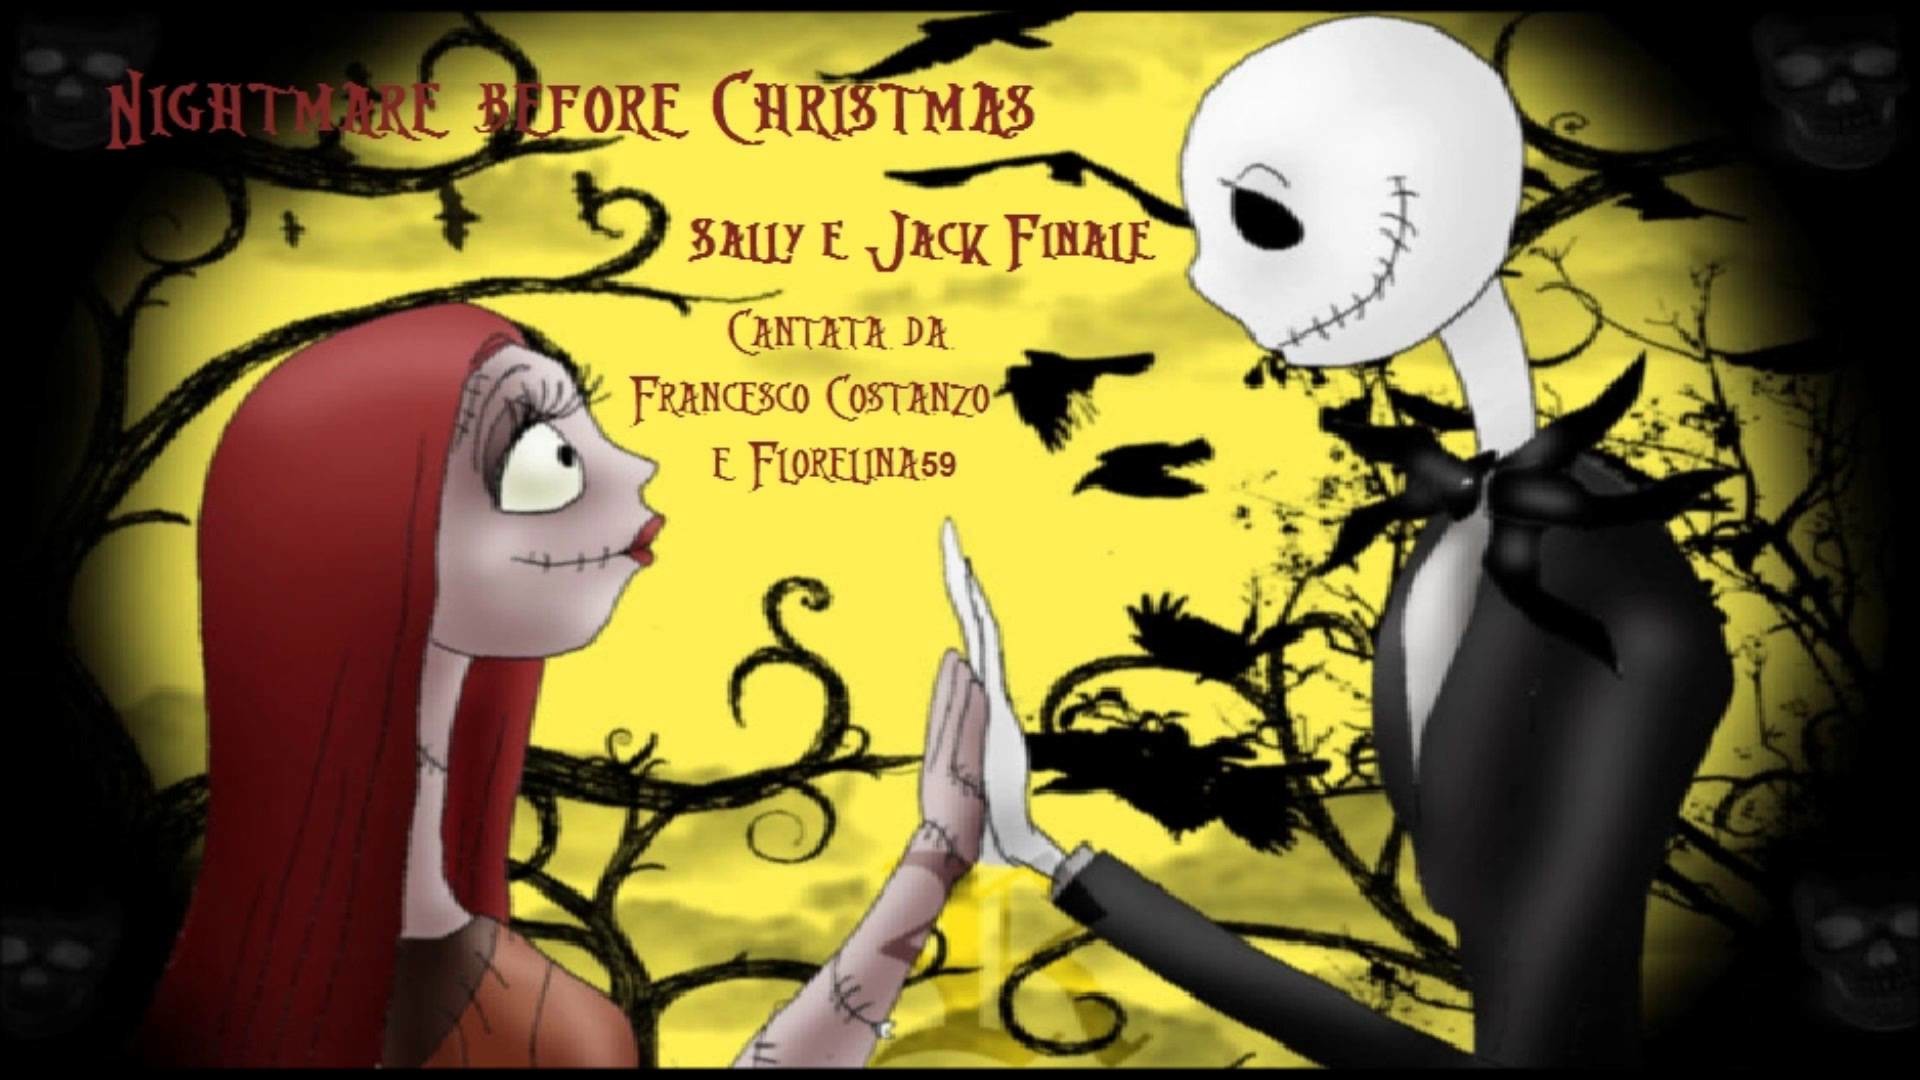 Nightmare before Christmas Sally e Jack finale Duetto con